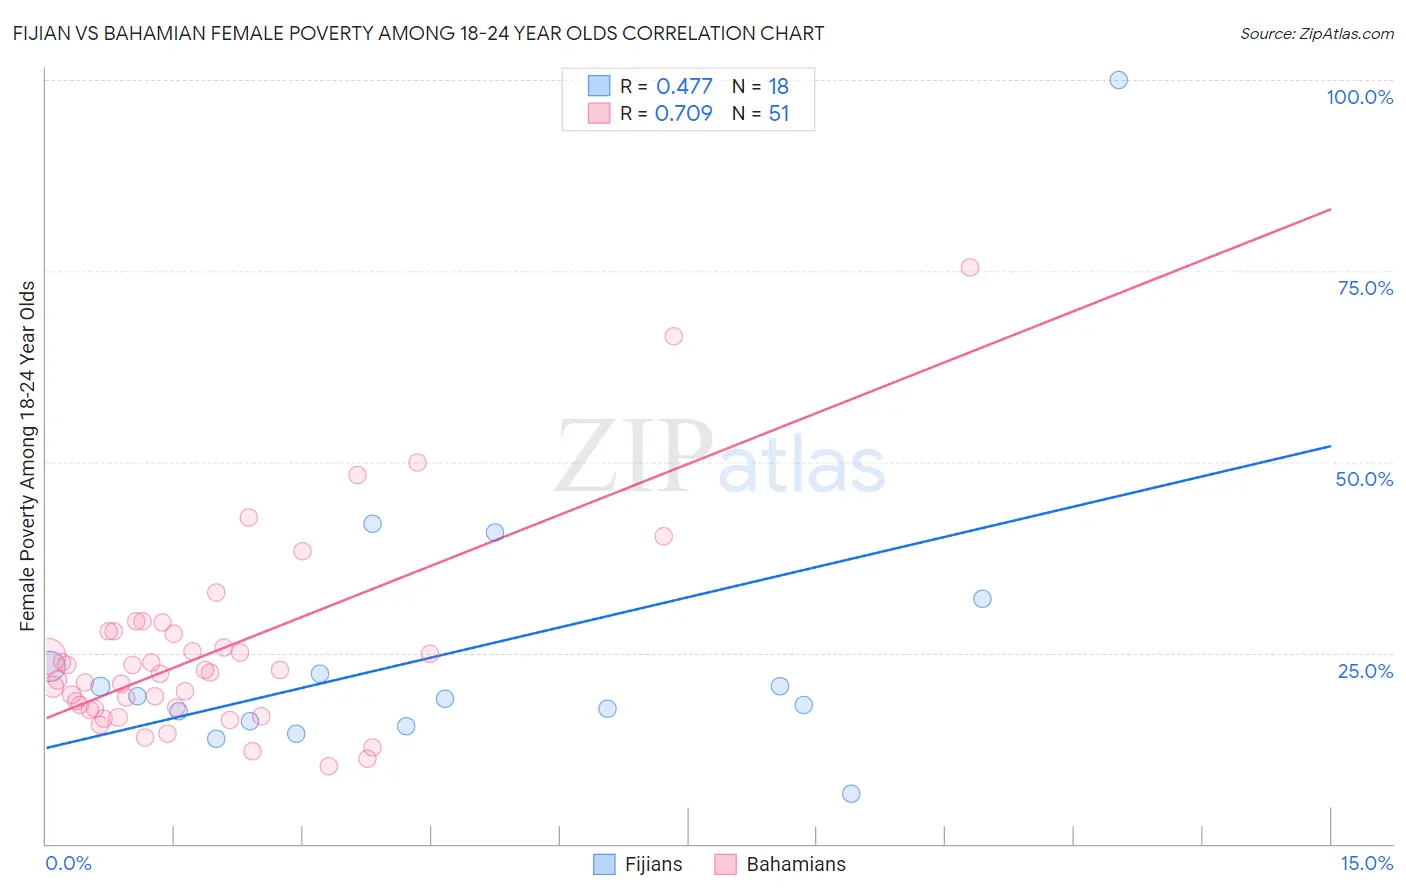 Fijian vs Bahamian Female Poverty Among 18-24 Year Olds